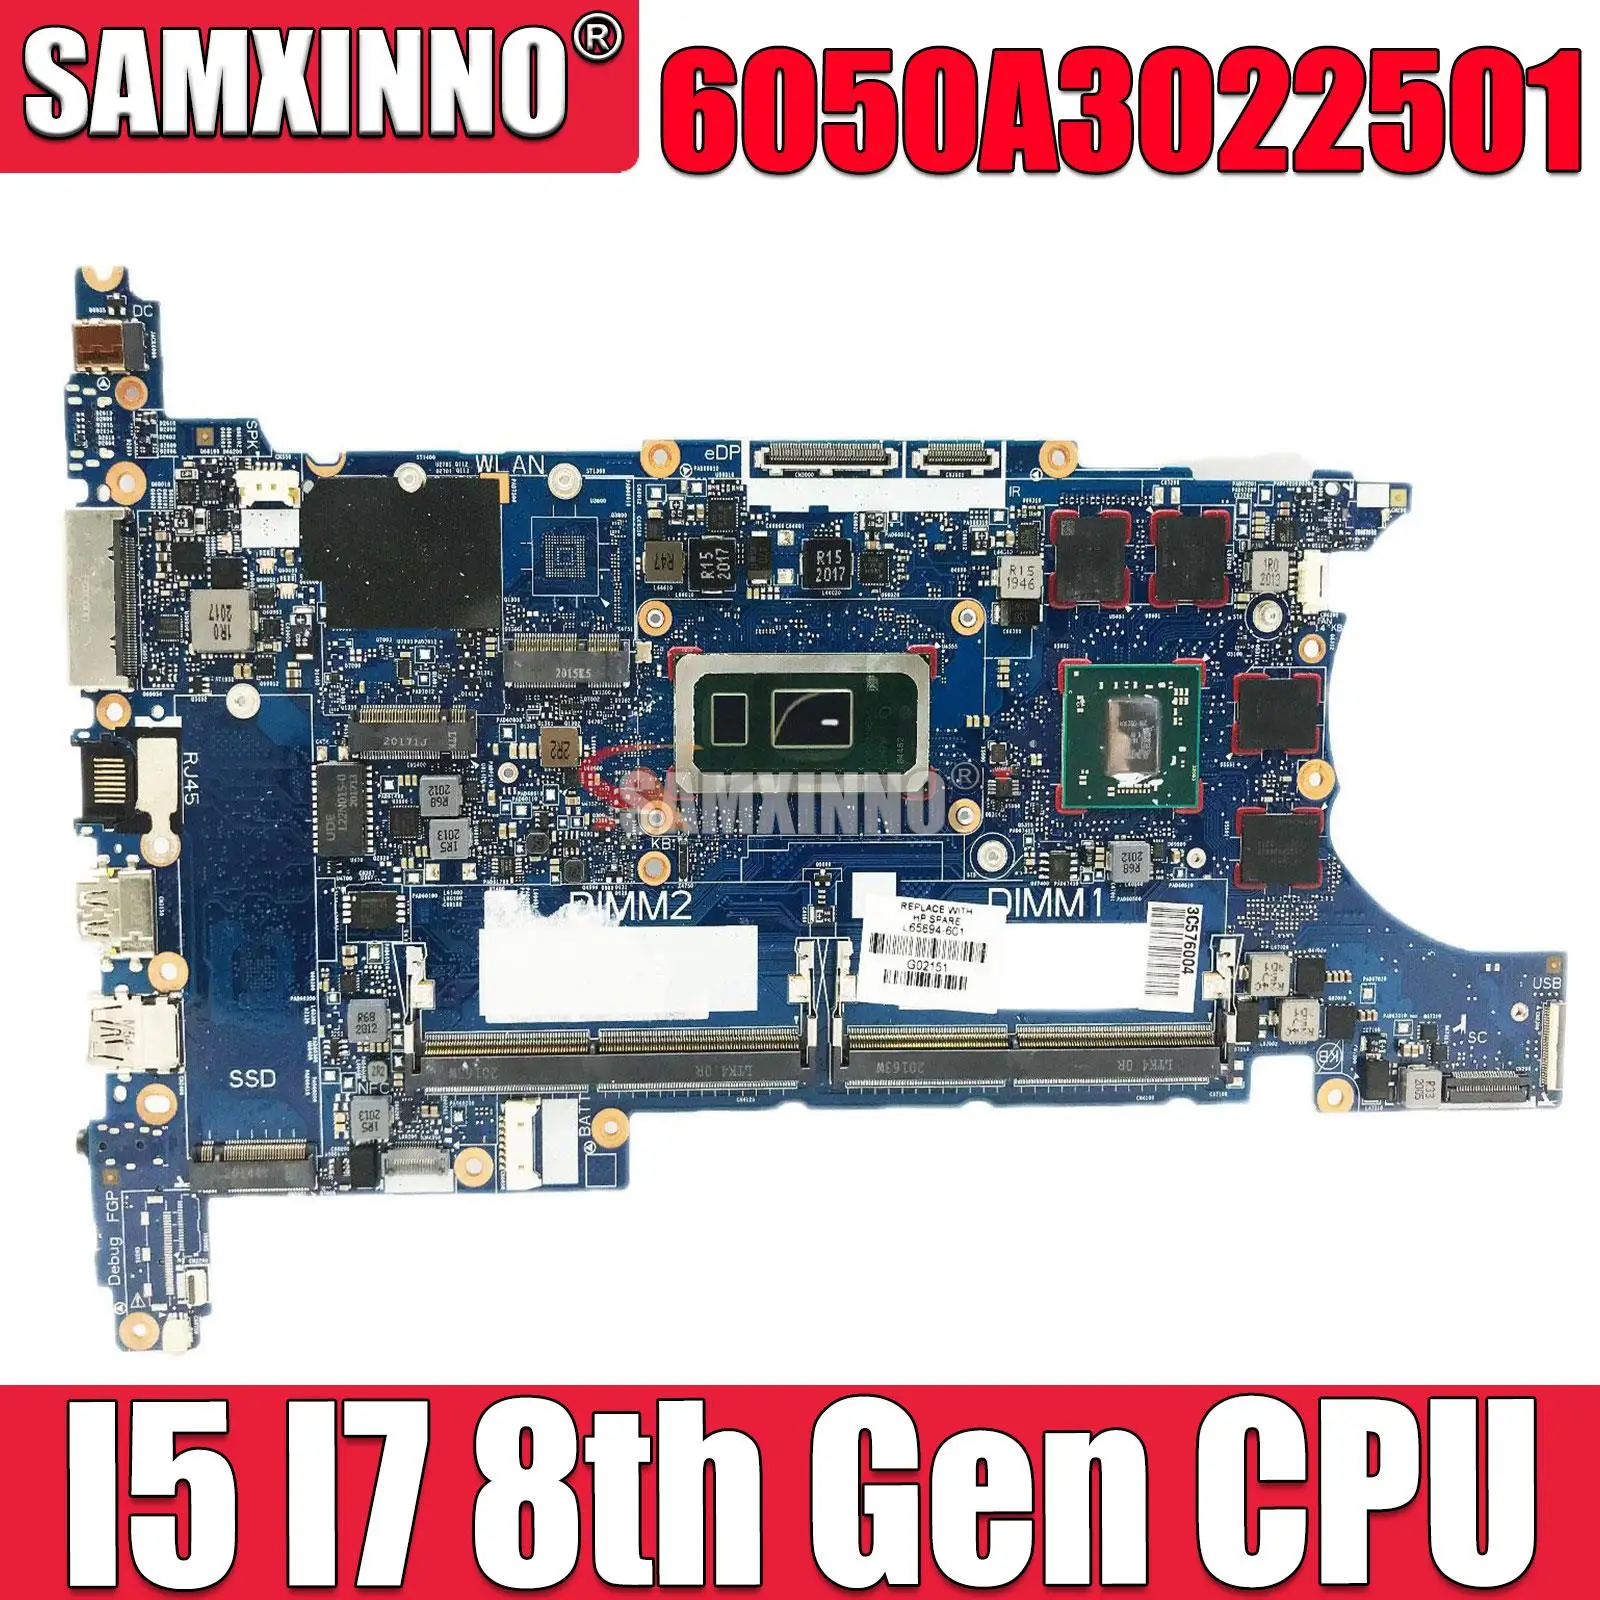 

840 G6 6050A3022501 Motherboard with I5 I7 8th Gen CPU VGPU FOR HP 840 G6 OSR 15u G6 laptop motherboard Mainboard UMA/DIS